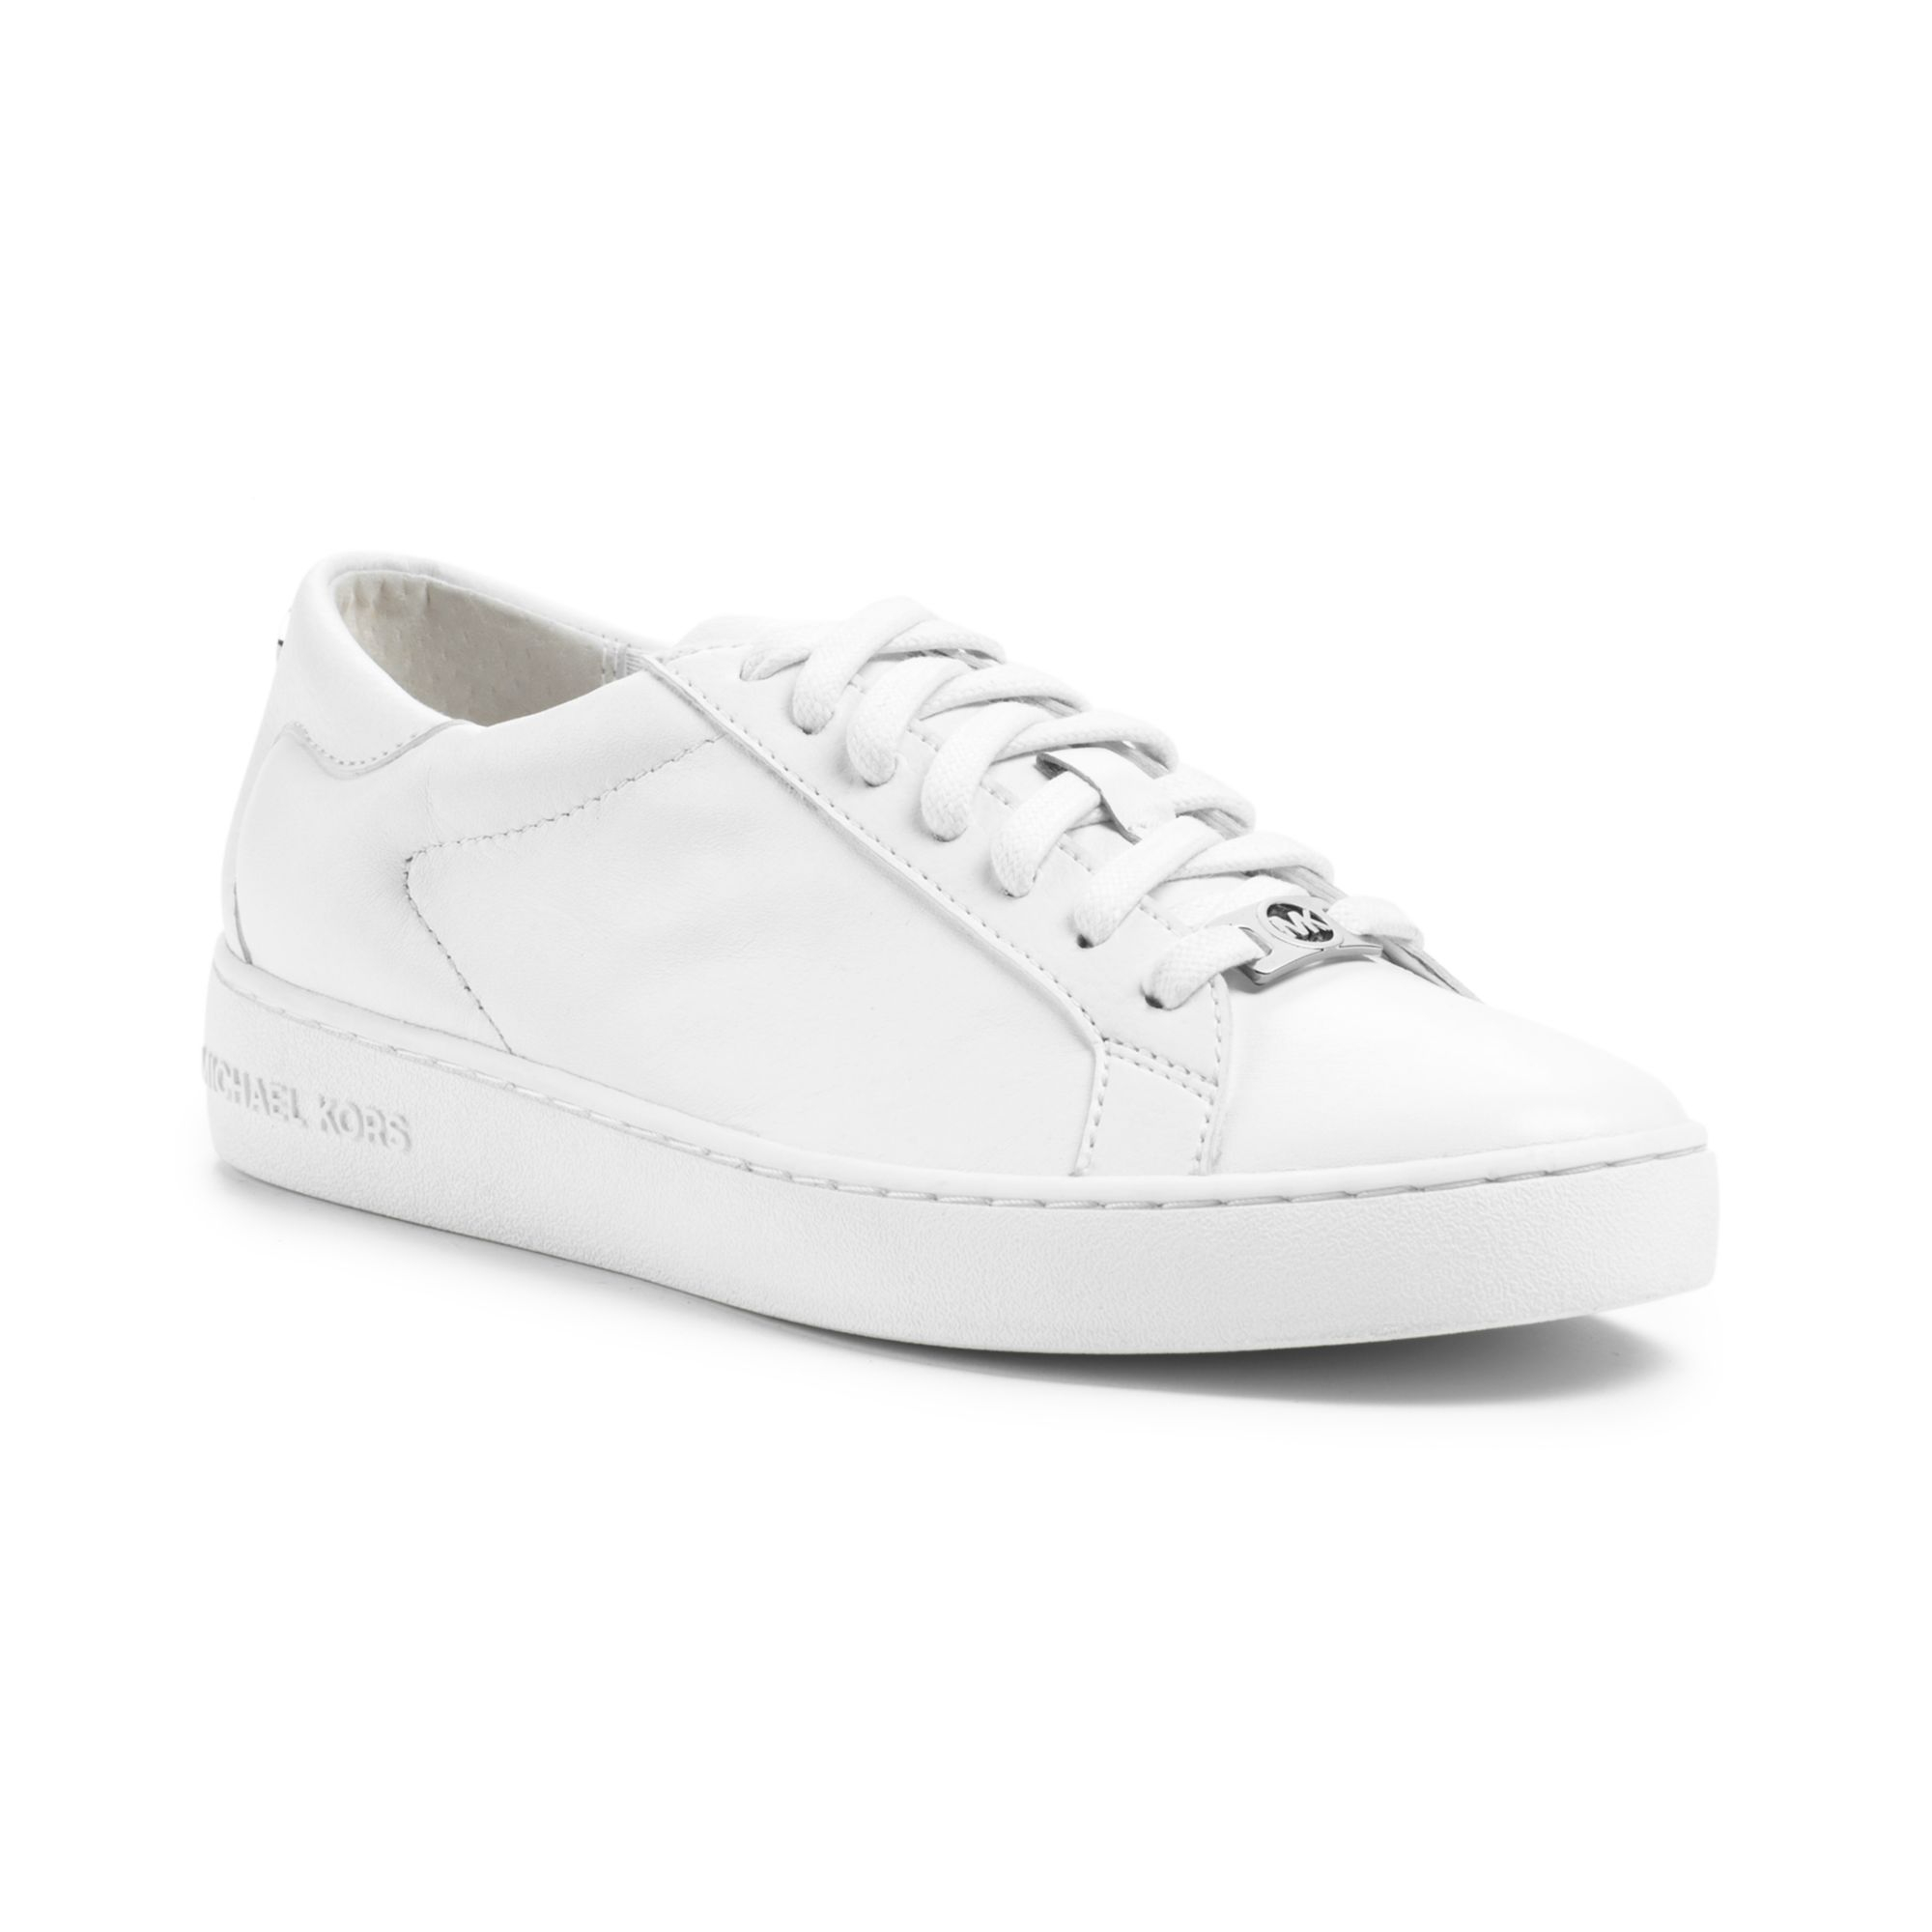 michael kors white tennis shoes